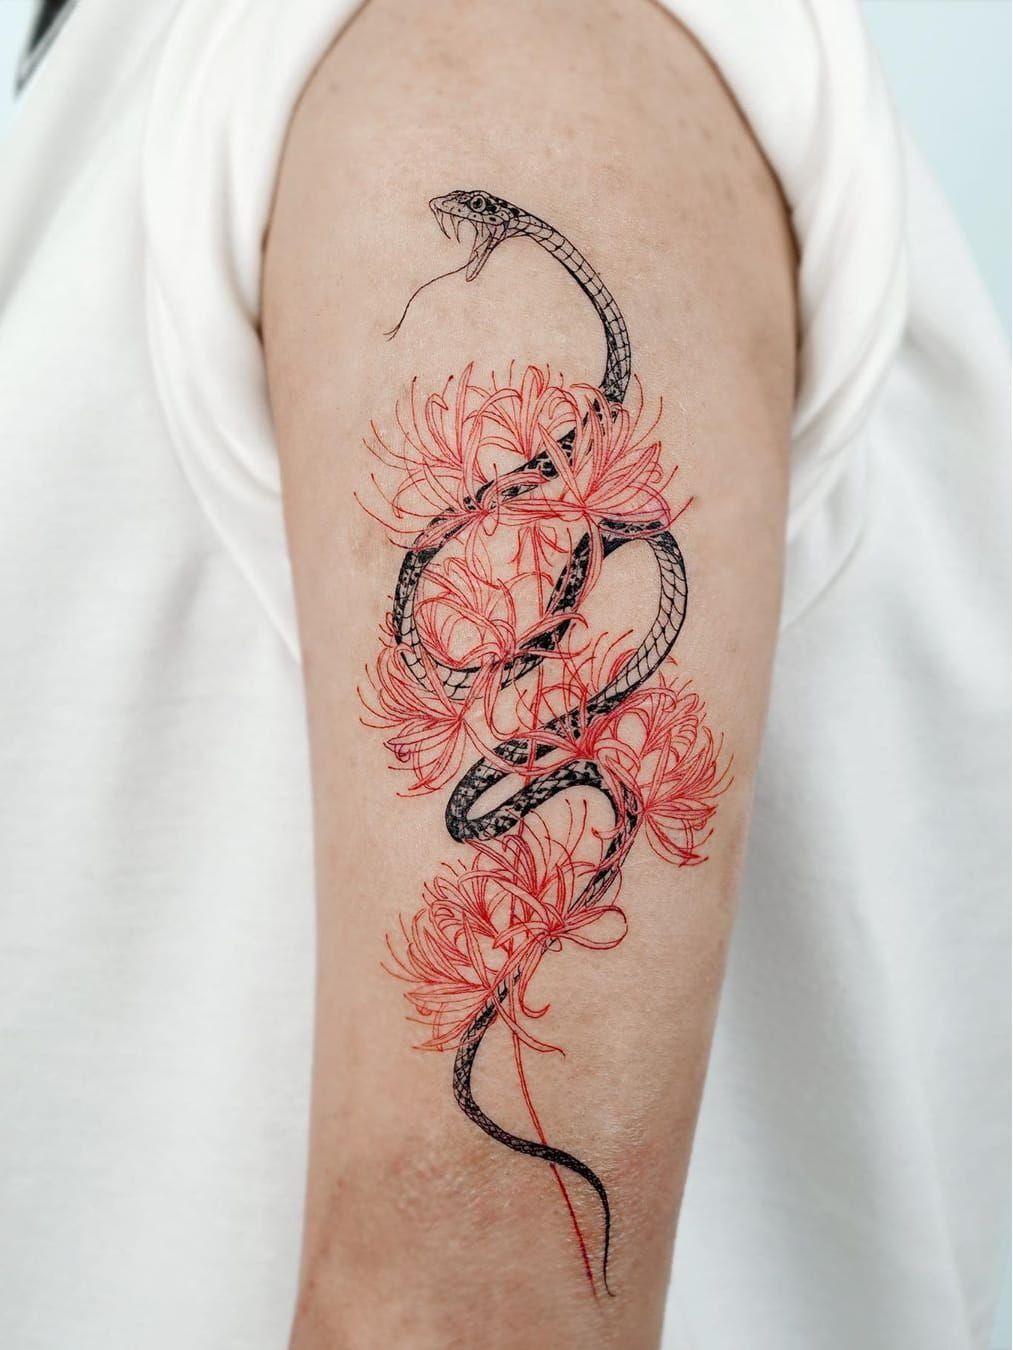 Fine line snake  Moon tattoo by David VanCasso at Skin Factory Ink Las  Vegas NV  rtattoos